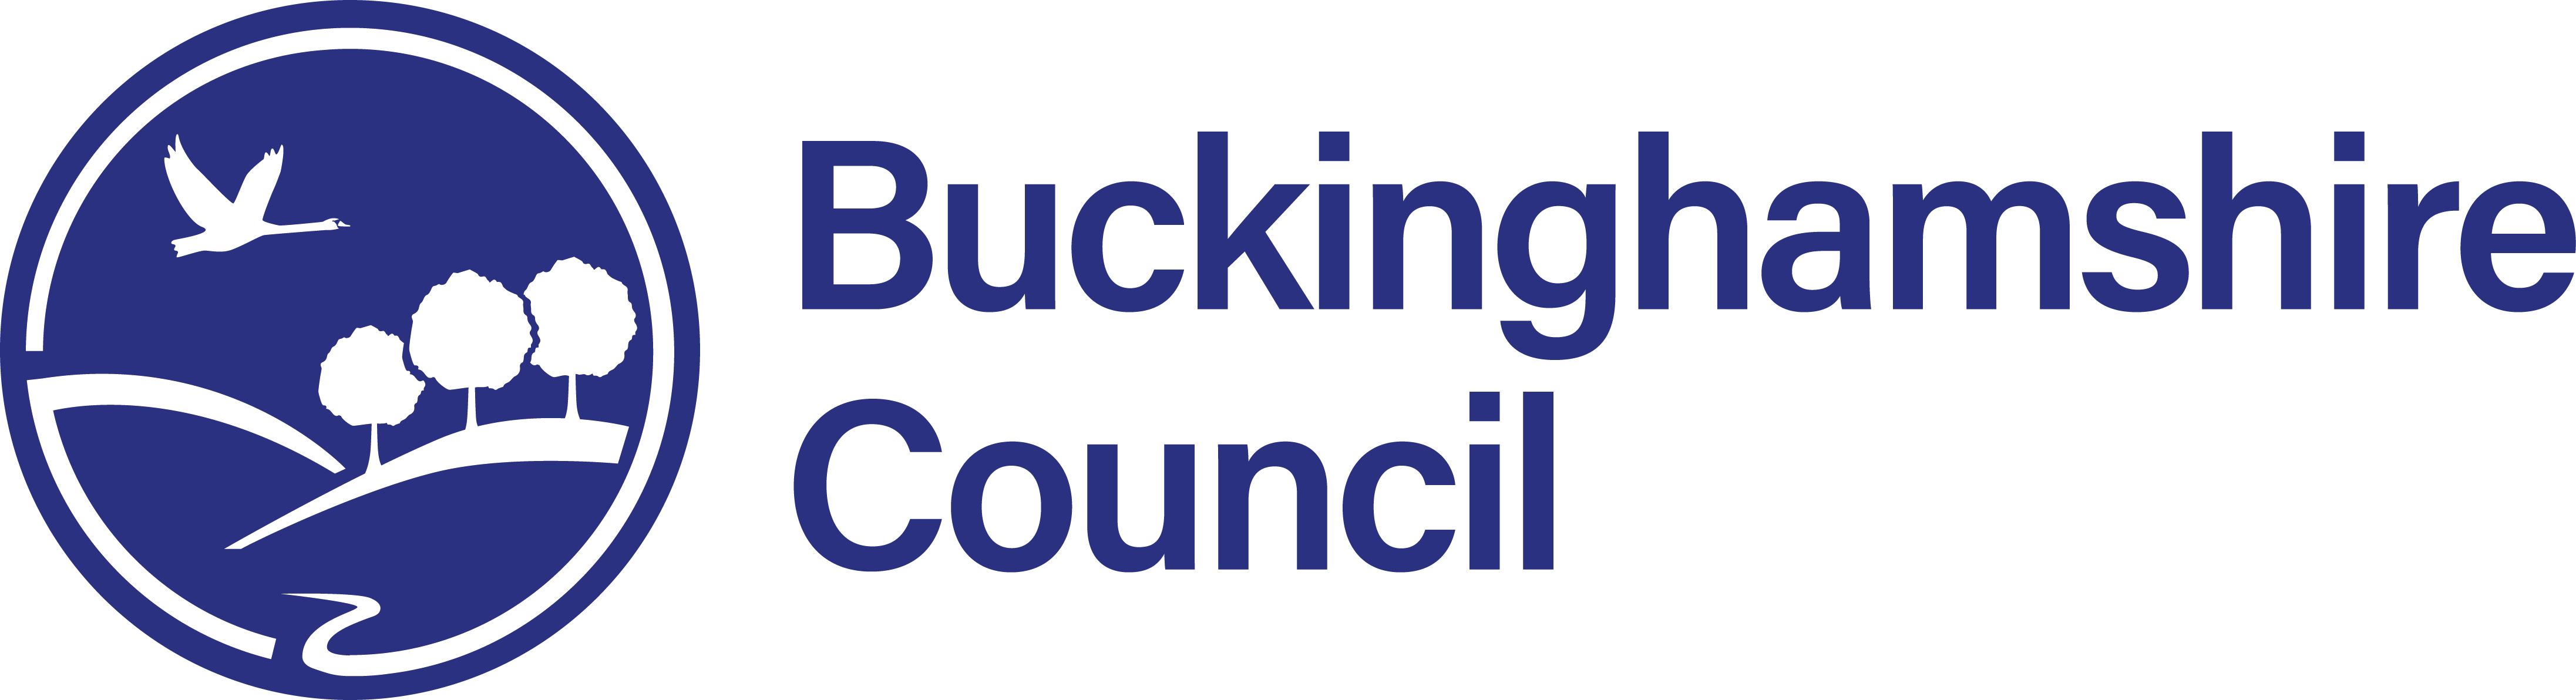 Buckinghamshire Council loo